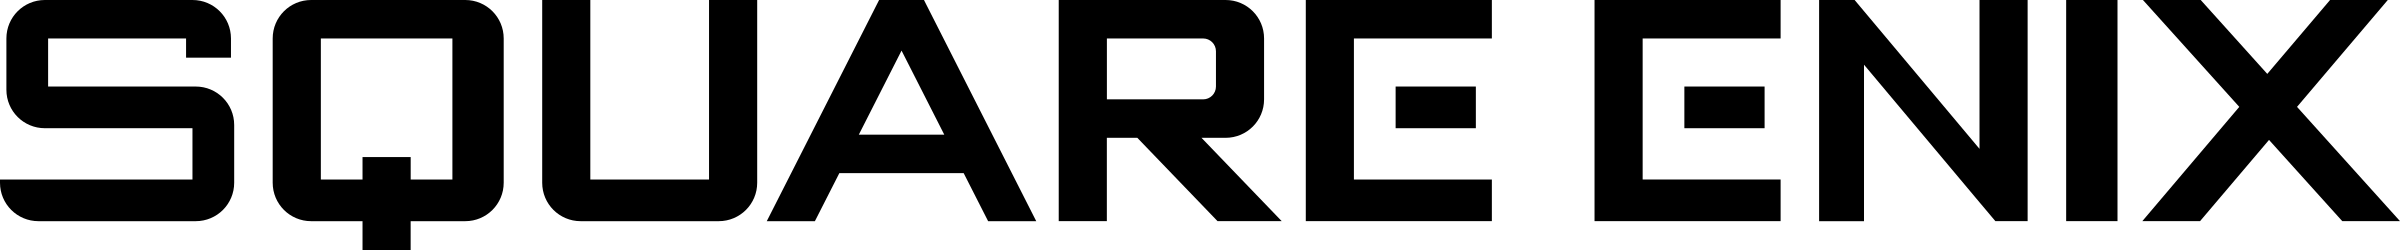 square-enix-1-logo-black-and-white.png